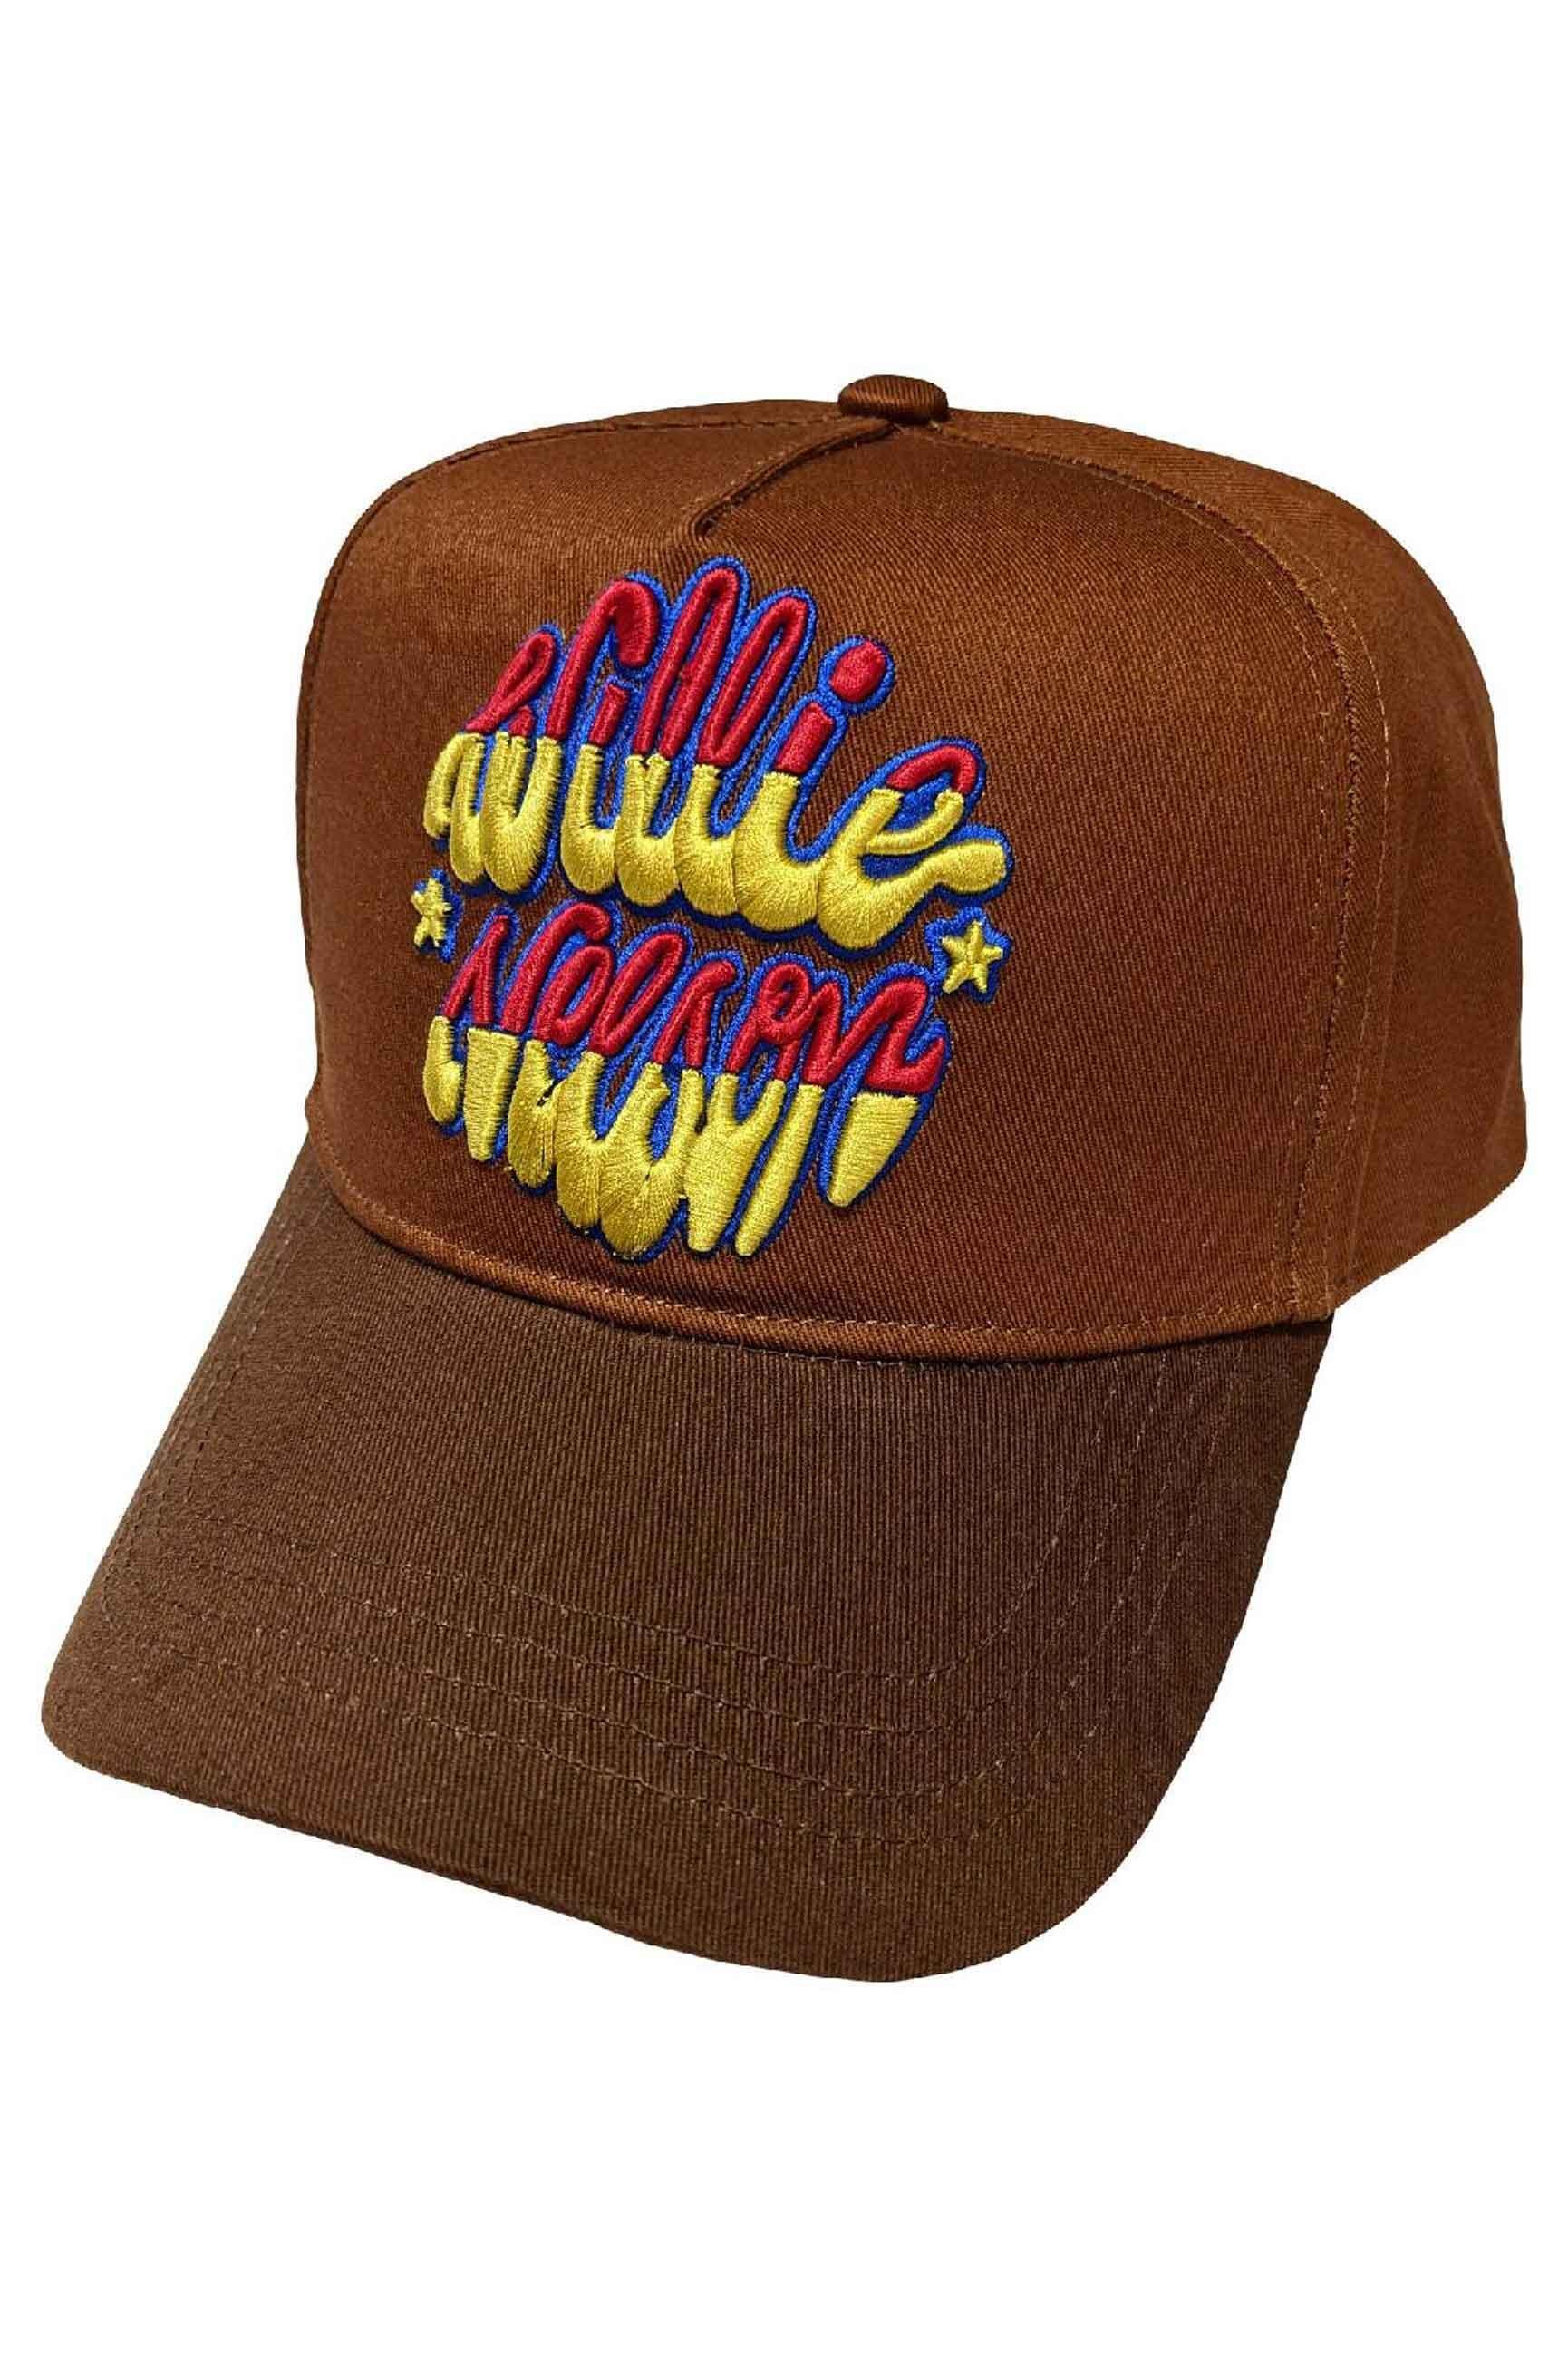 компакт диск warner willie nelson – willie nelson family Бейсбольная кепка с логотипом и эмблемой Willie Nelson, коричневый